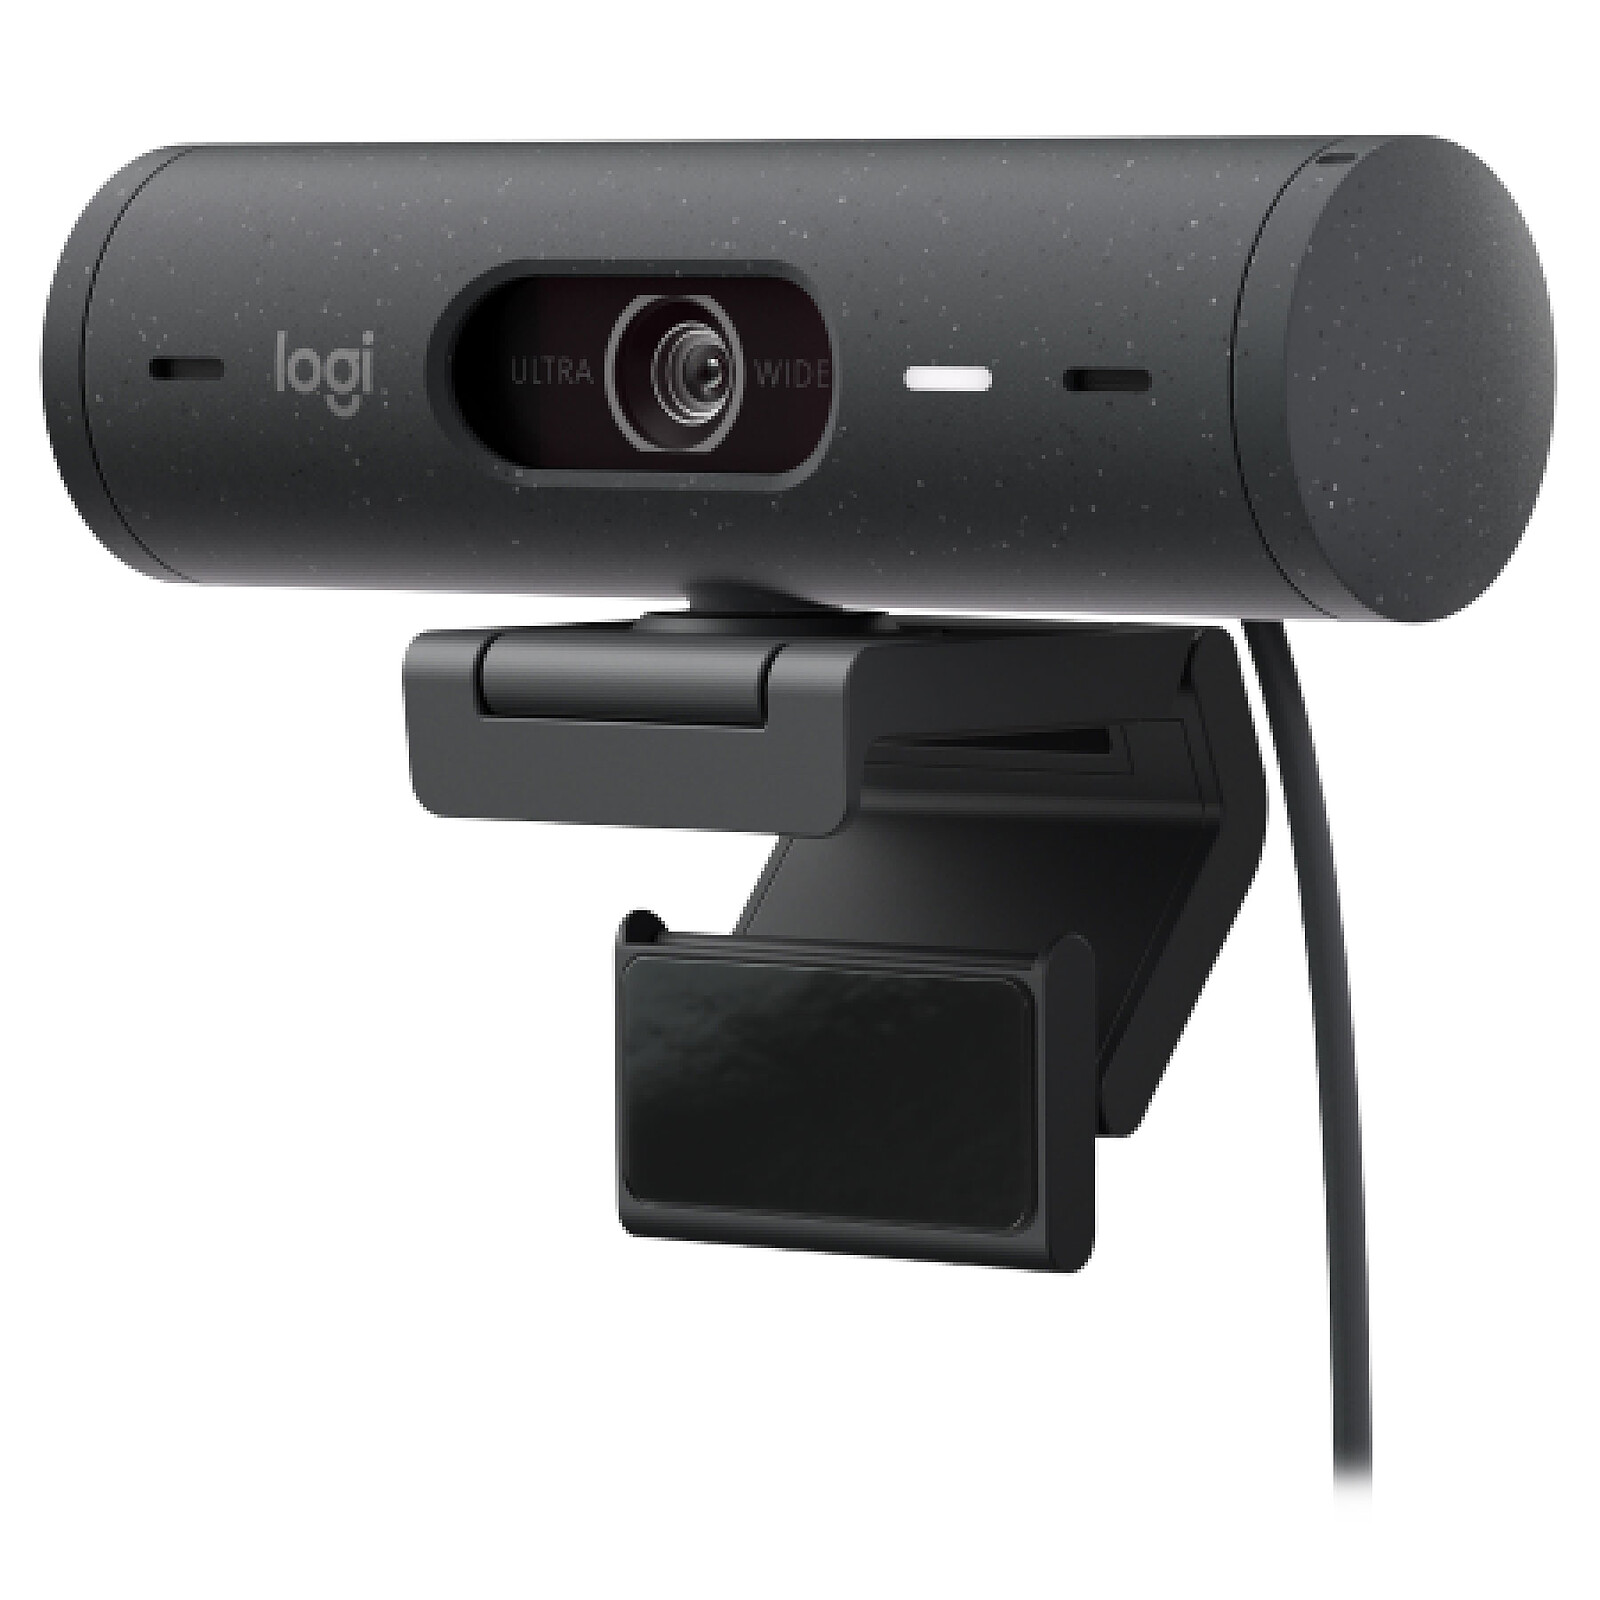 Webcaméra HD 1080p à ultra-grand-angle Pro C930E de Logitech